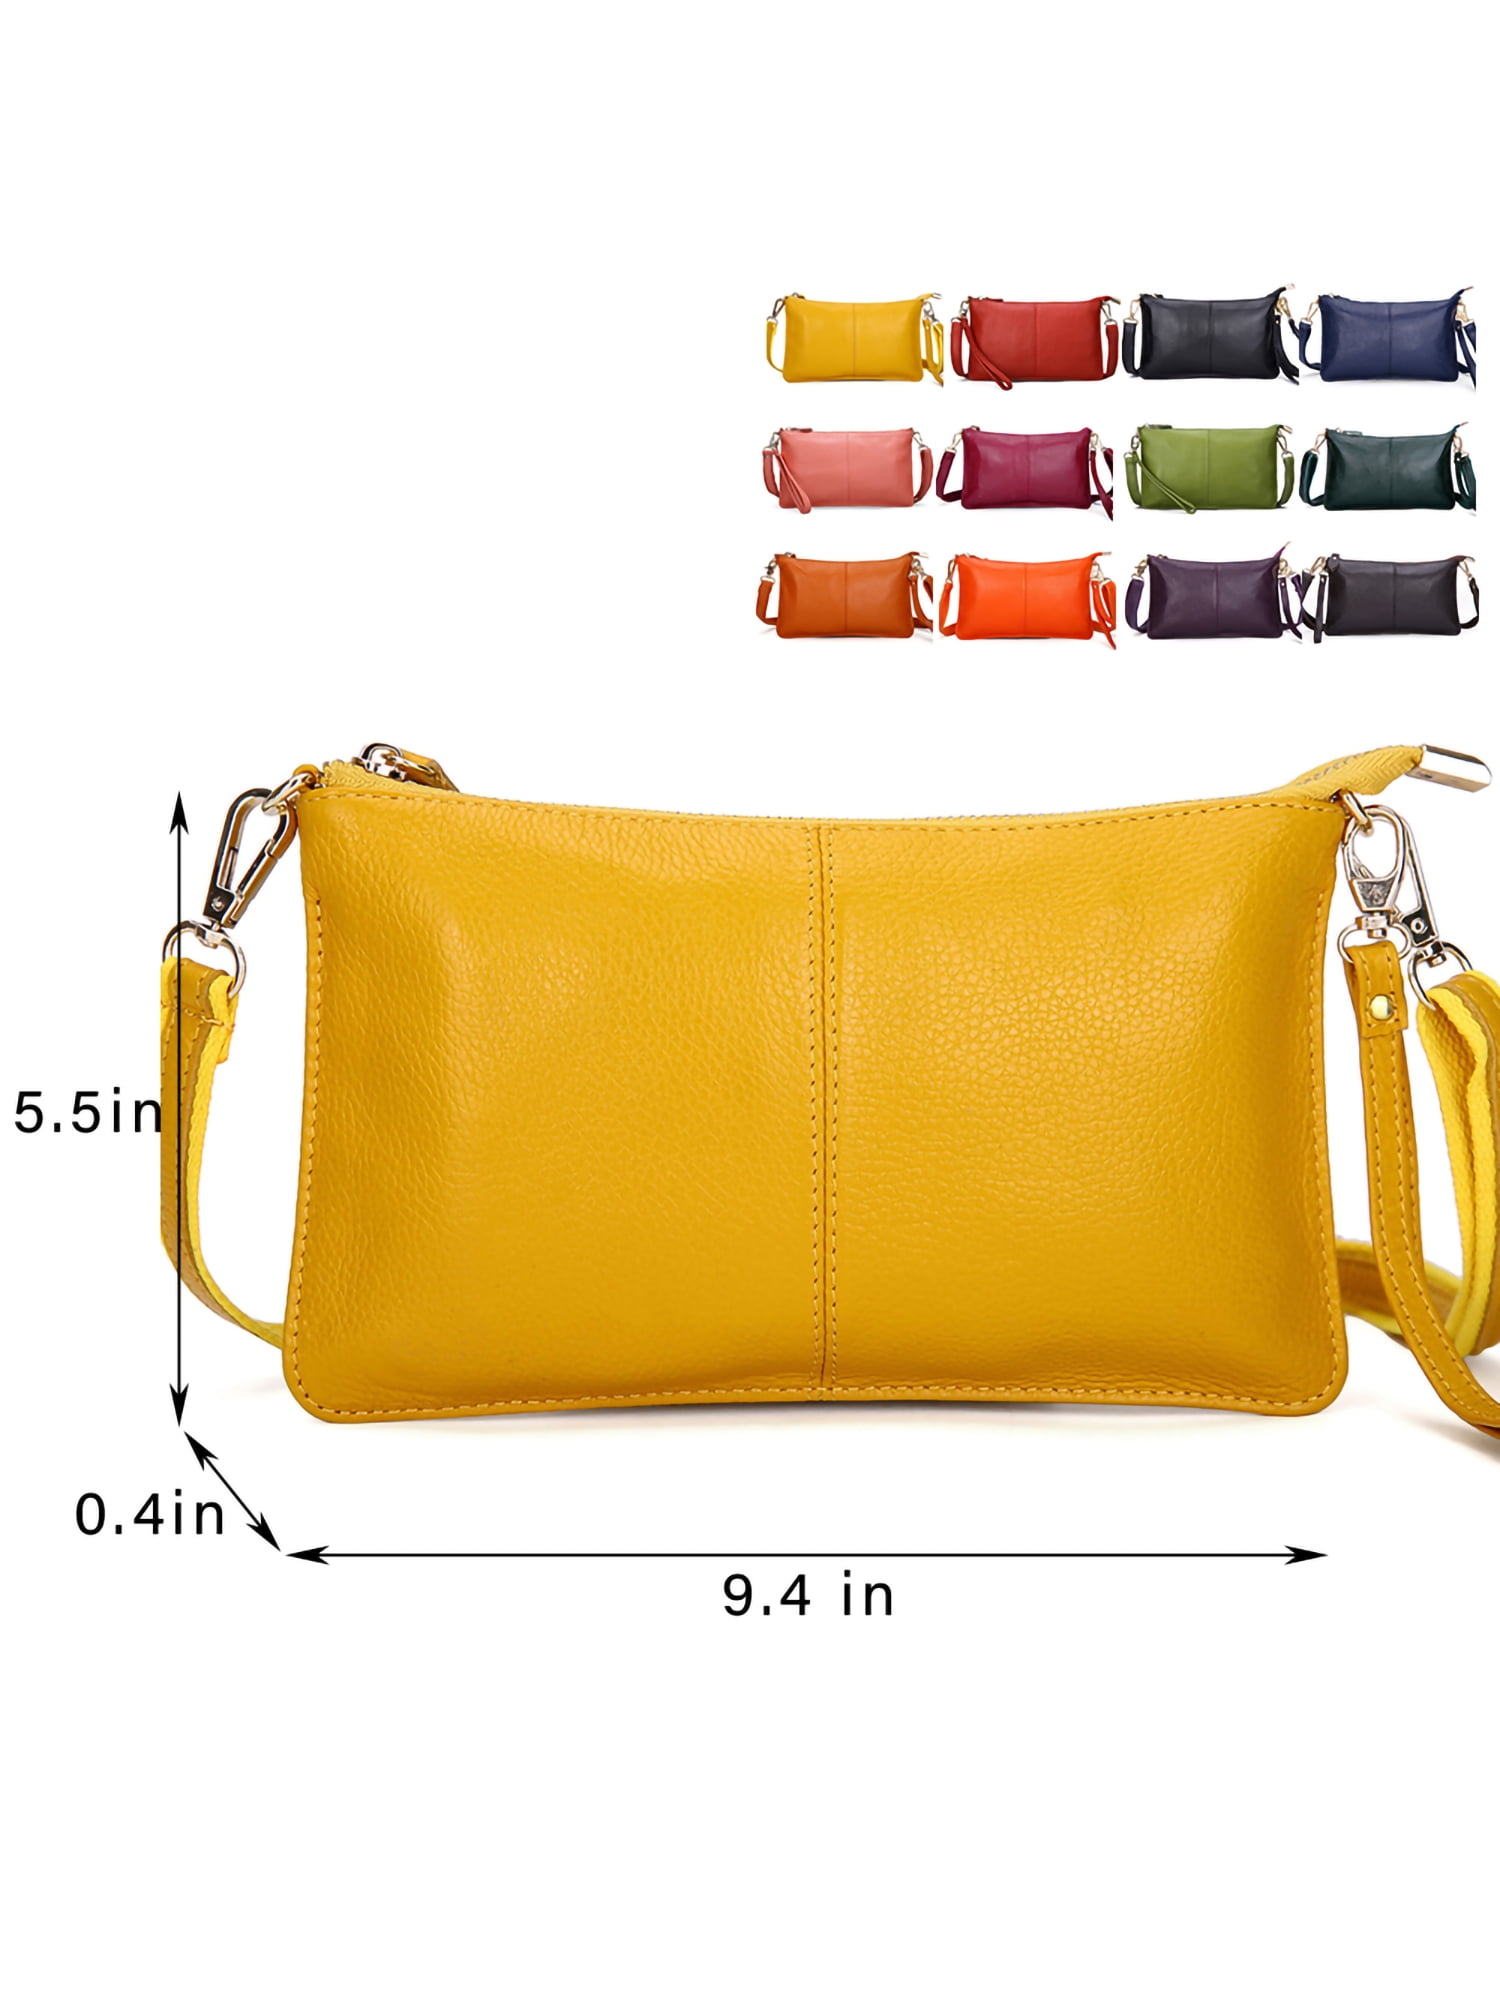 Dooney & Bourke | Bags | Dooney Bourke Purse Miami Beach Summer Theme Light  Yellow Small Handbag | Poshmark